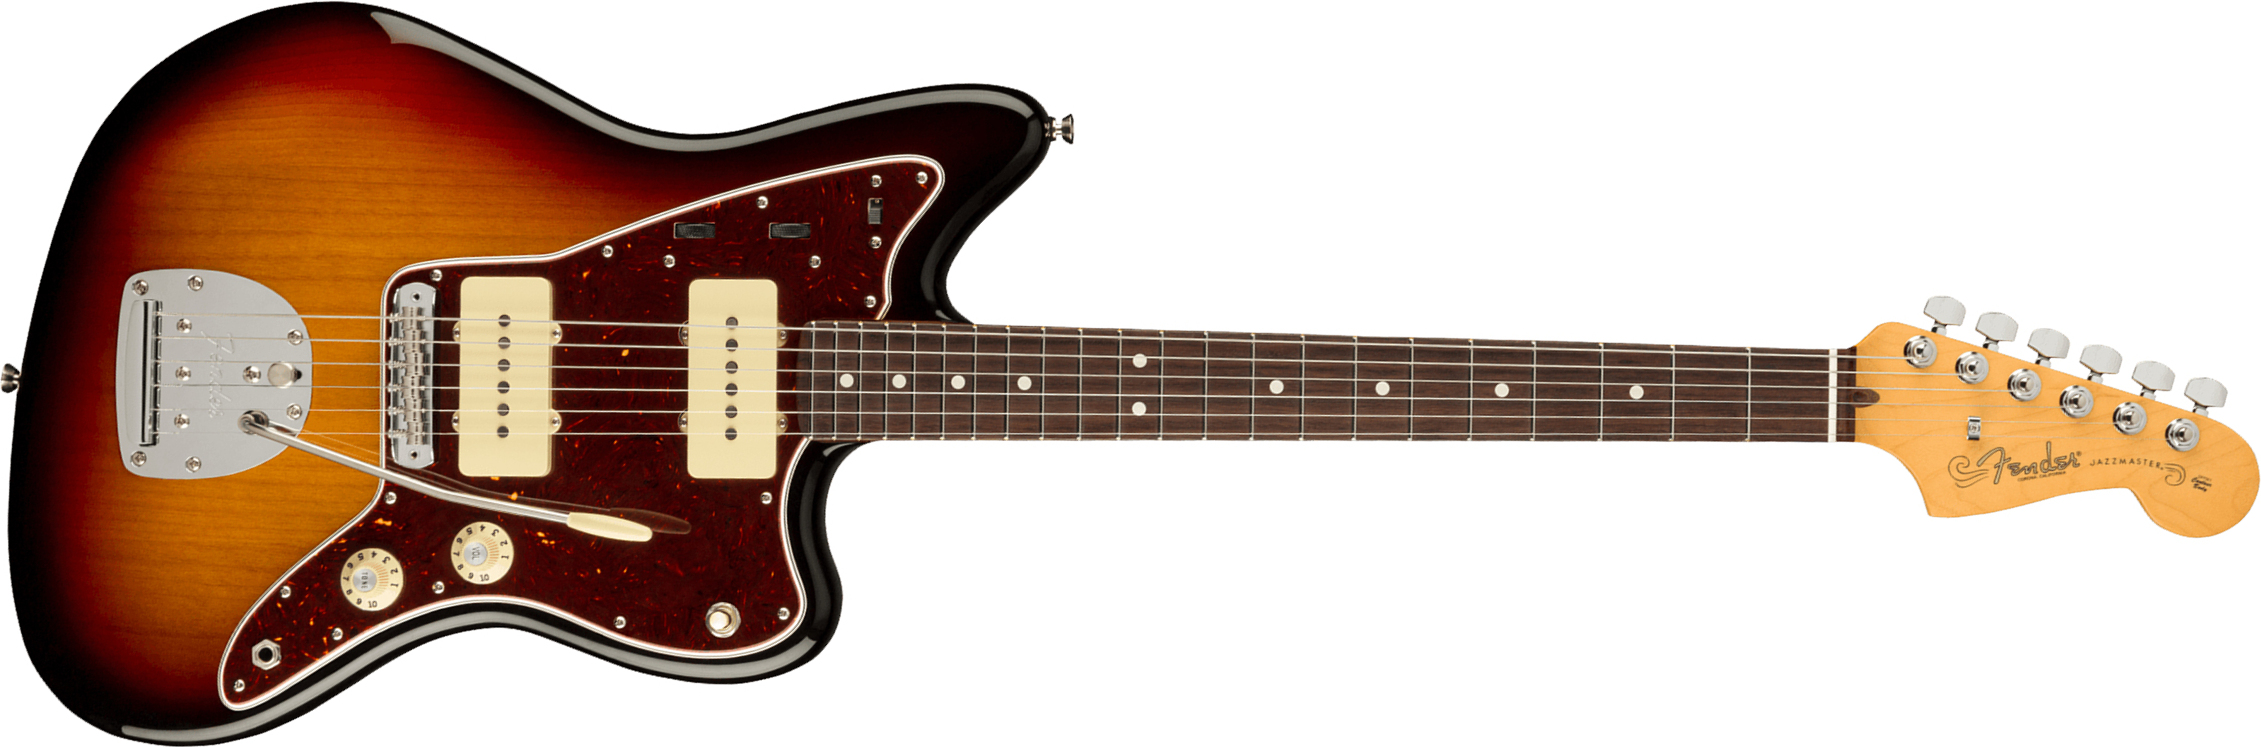 Fender Jazzmaster American Professional Ii Usa Rw - 3-color Sunburst - Retro rock electric guitar - Main picture